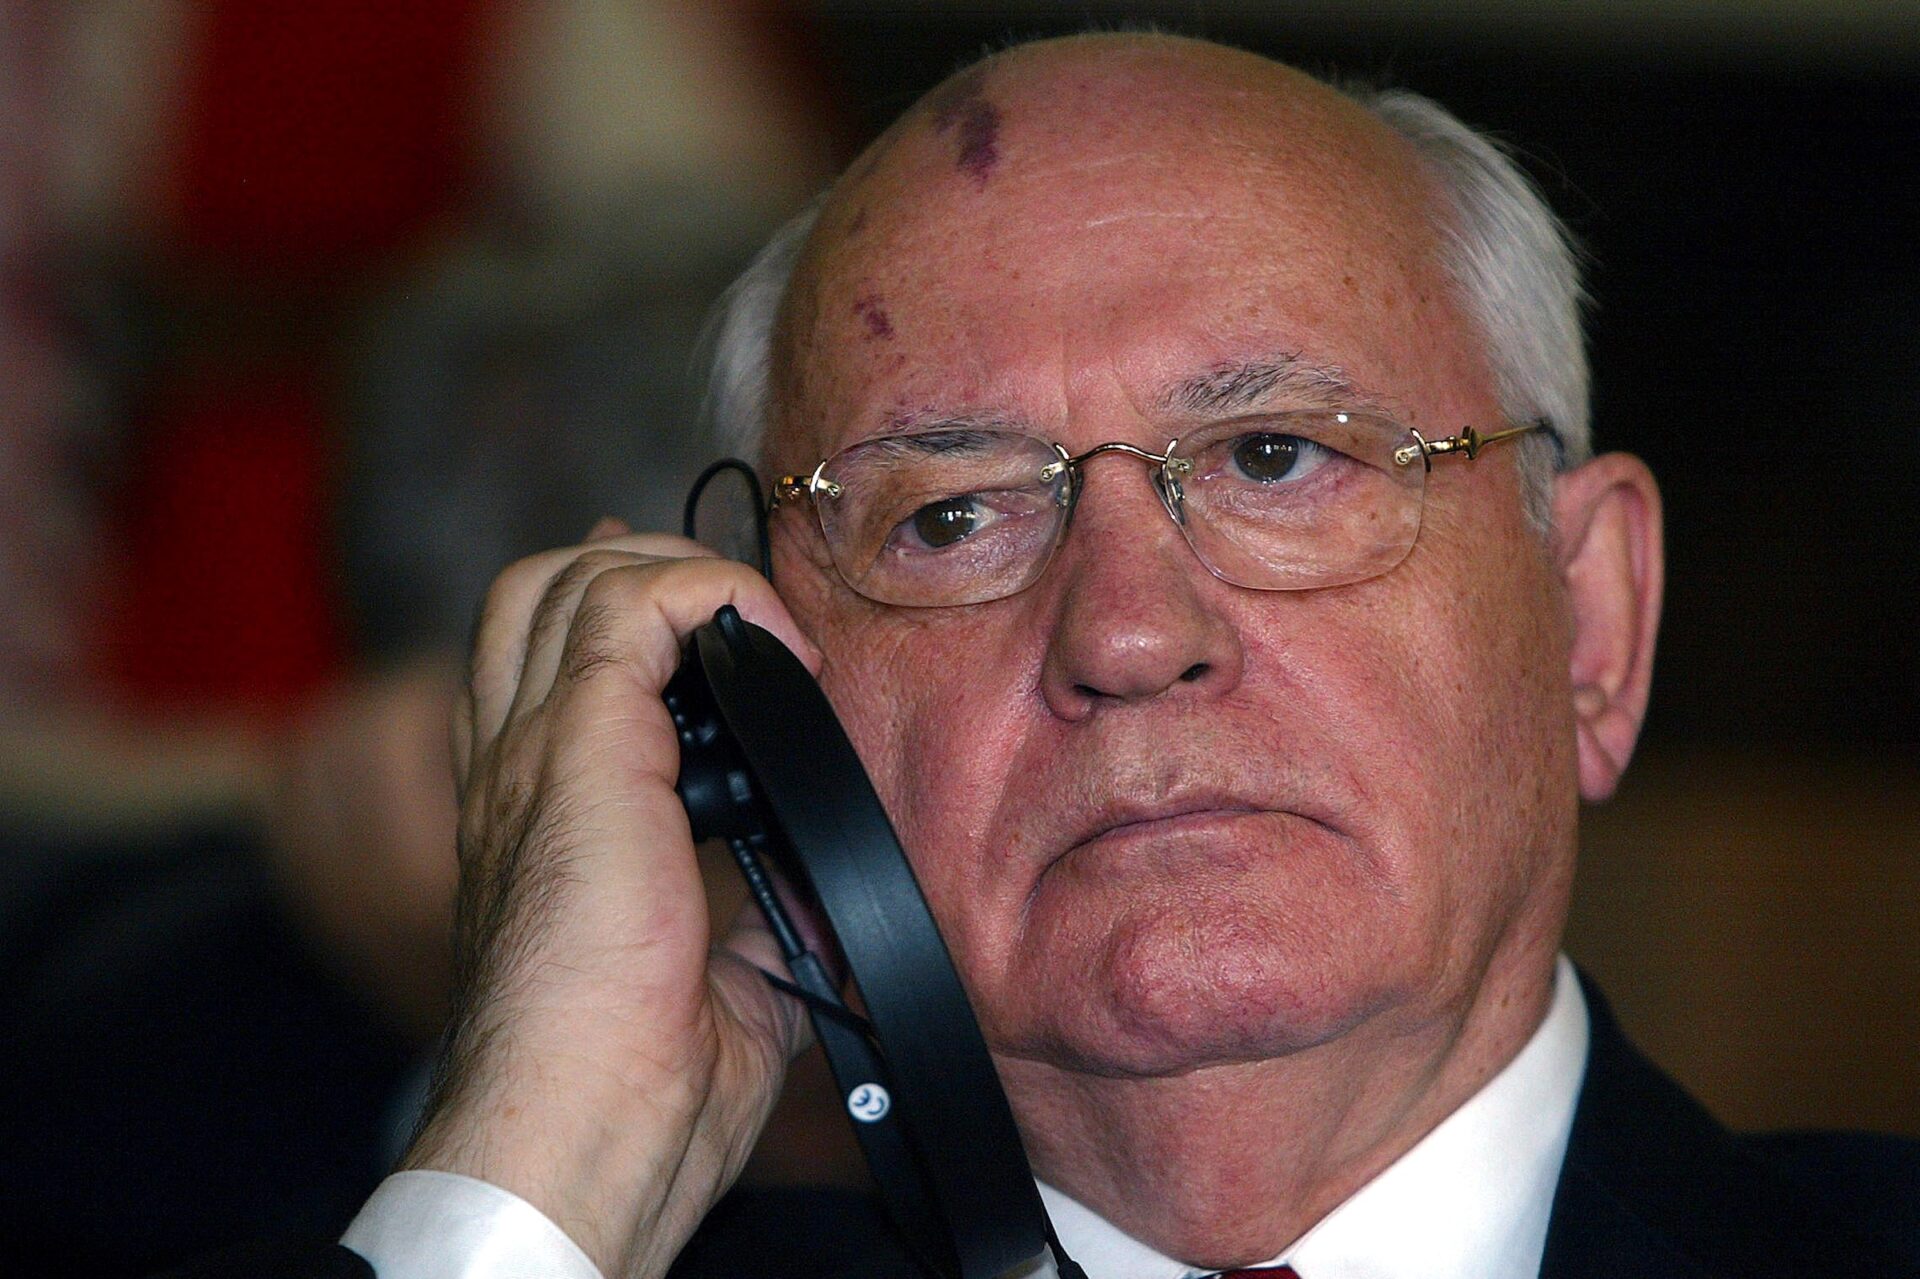 Celebrate Gorbachevâs failure to save the Soviet Union, not his heroism